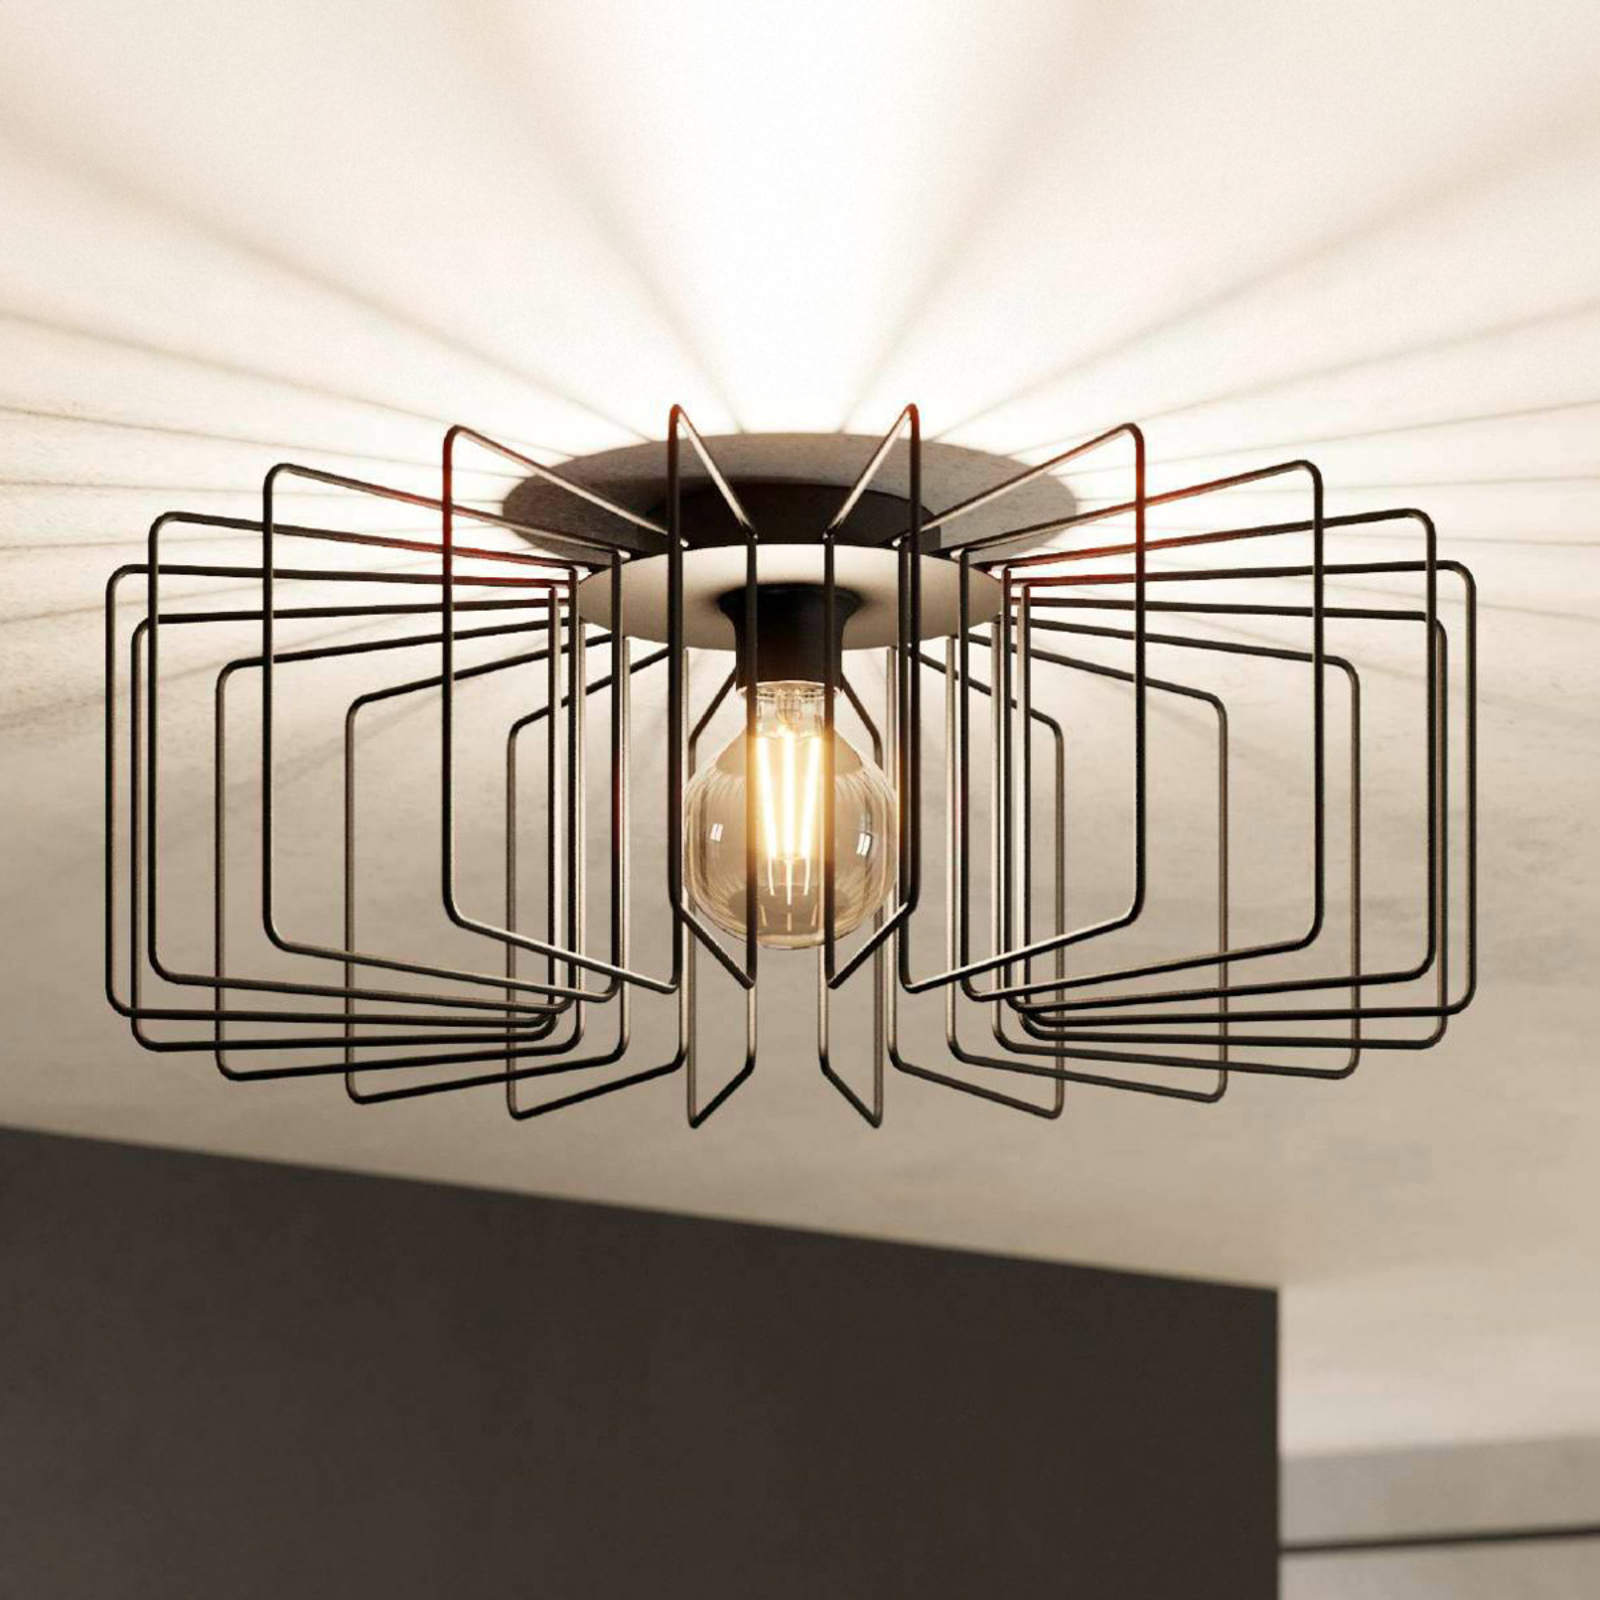 Tremedal ceiling light, cage design